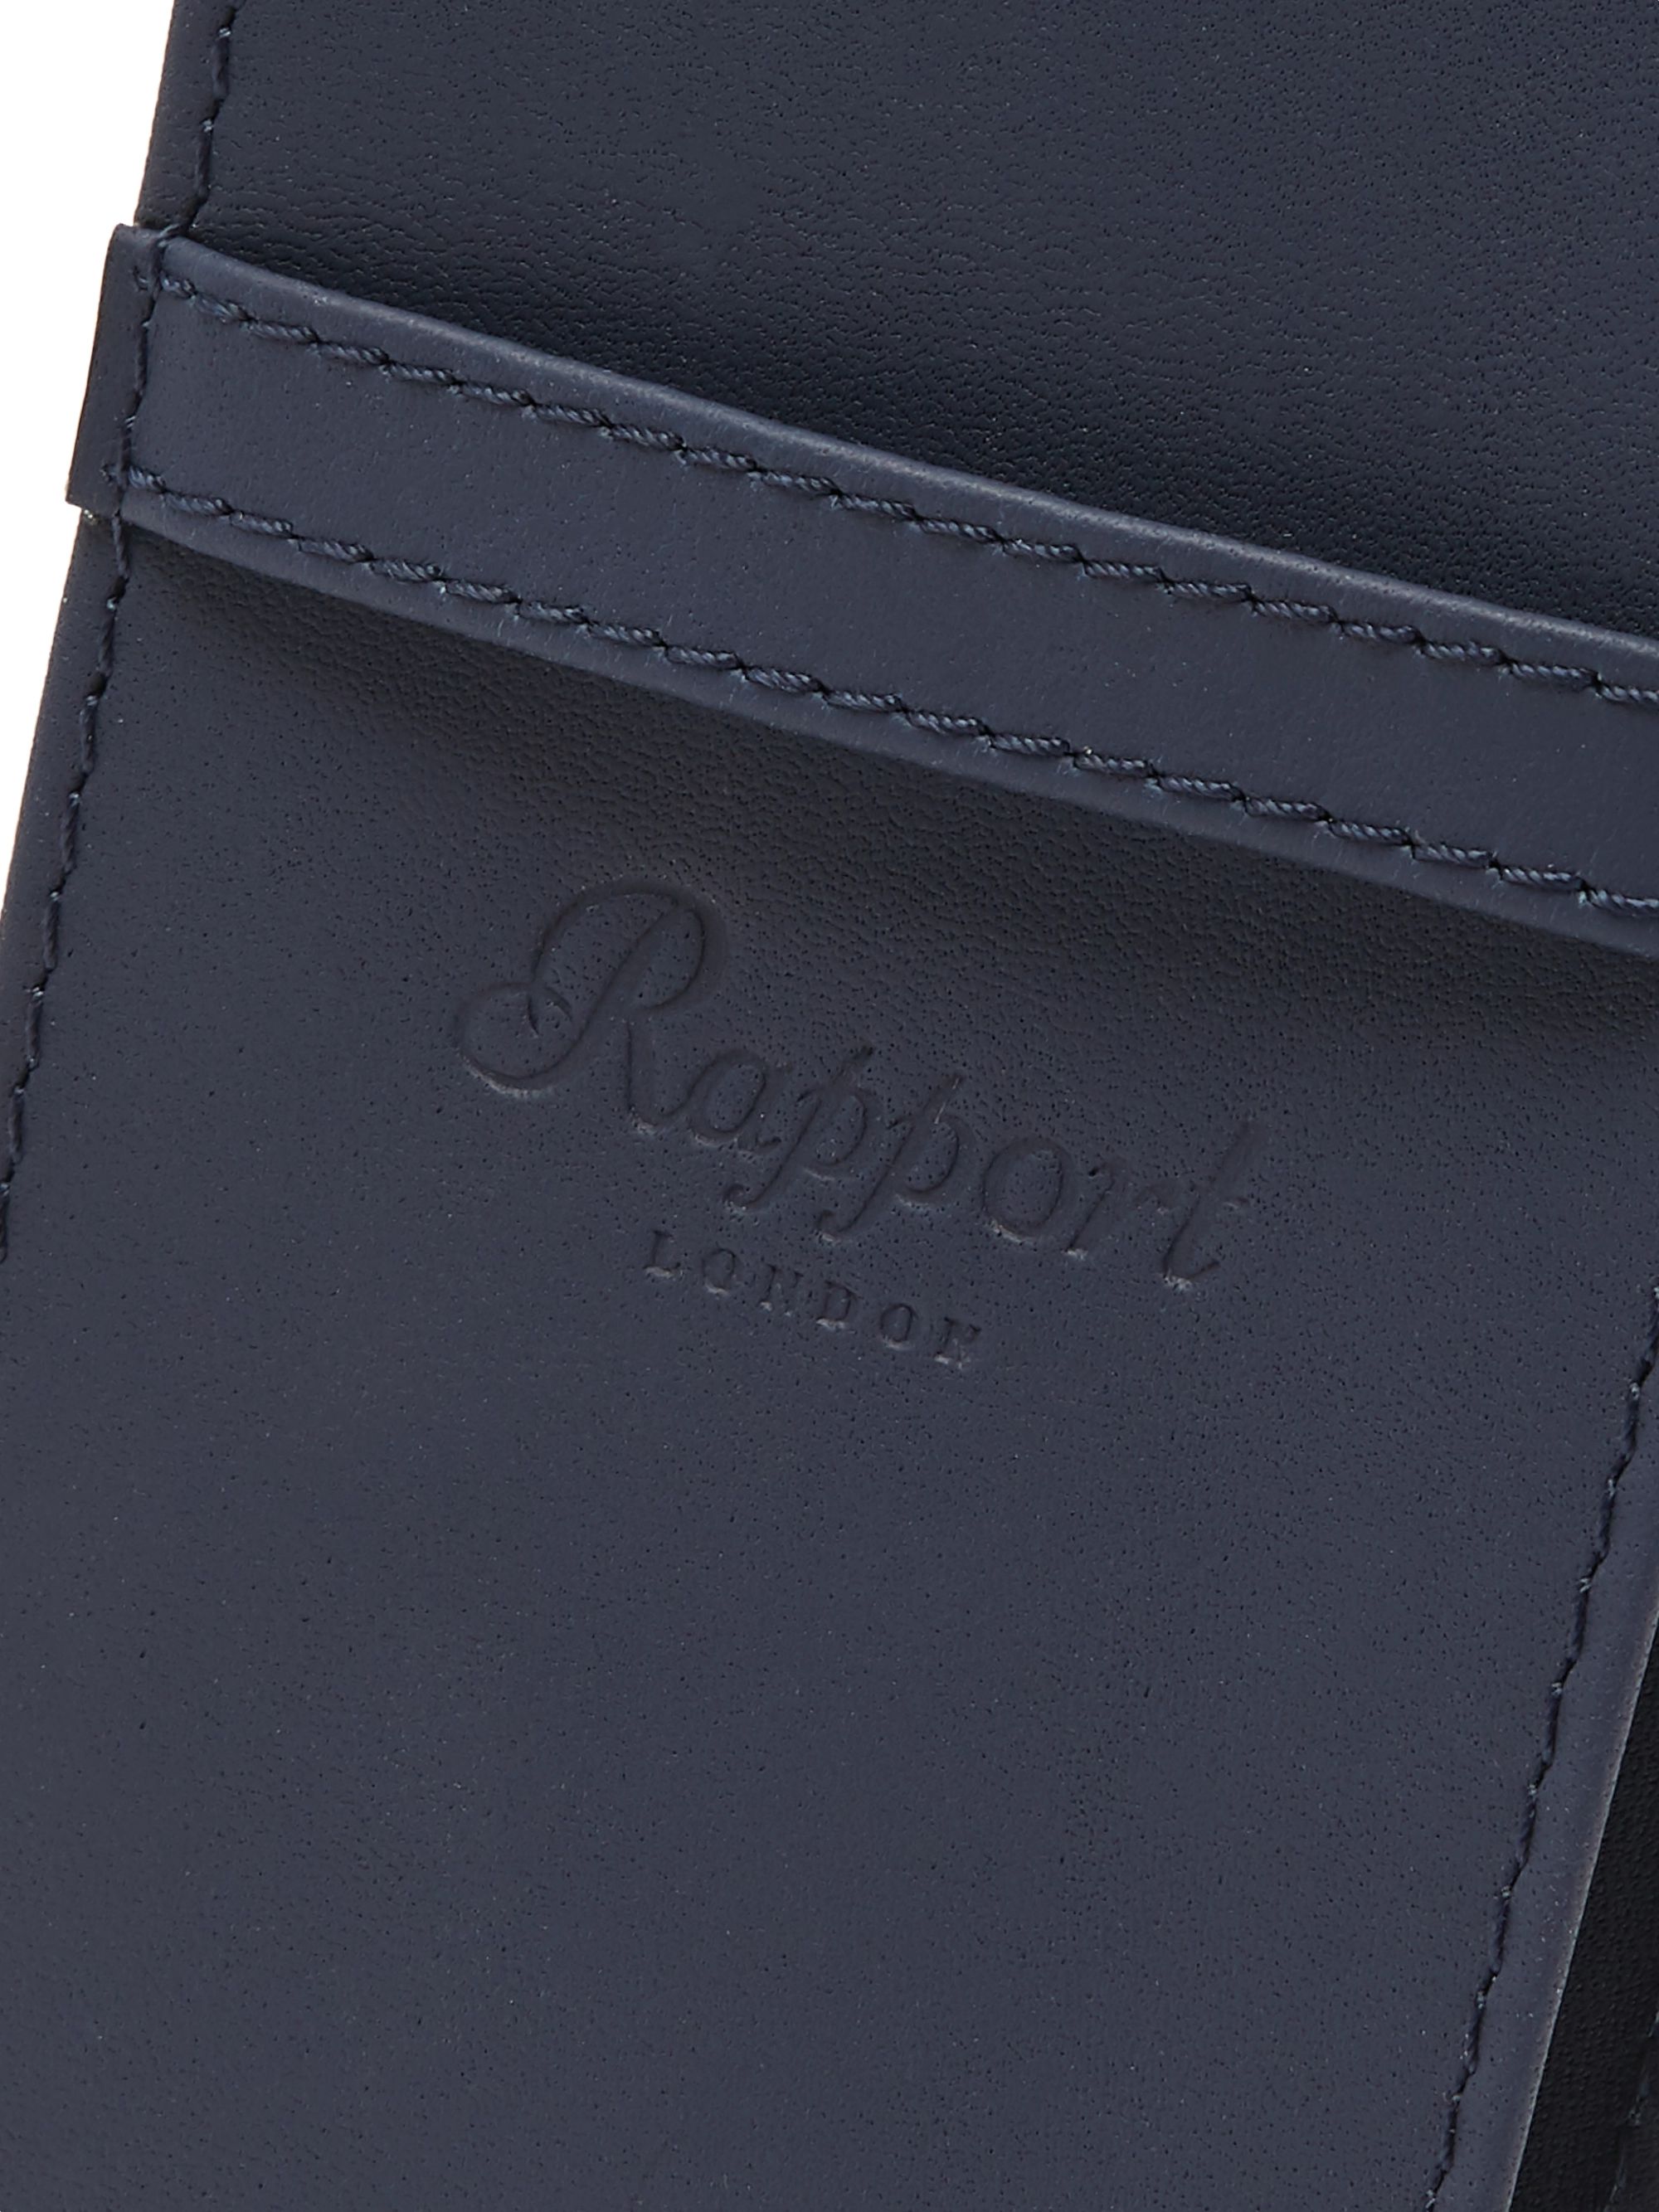 RAPPORT LONDON Hyde Park Leather Watch Case